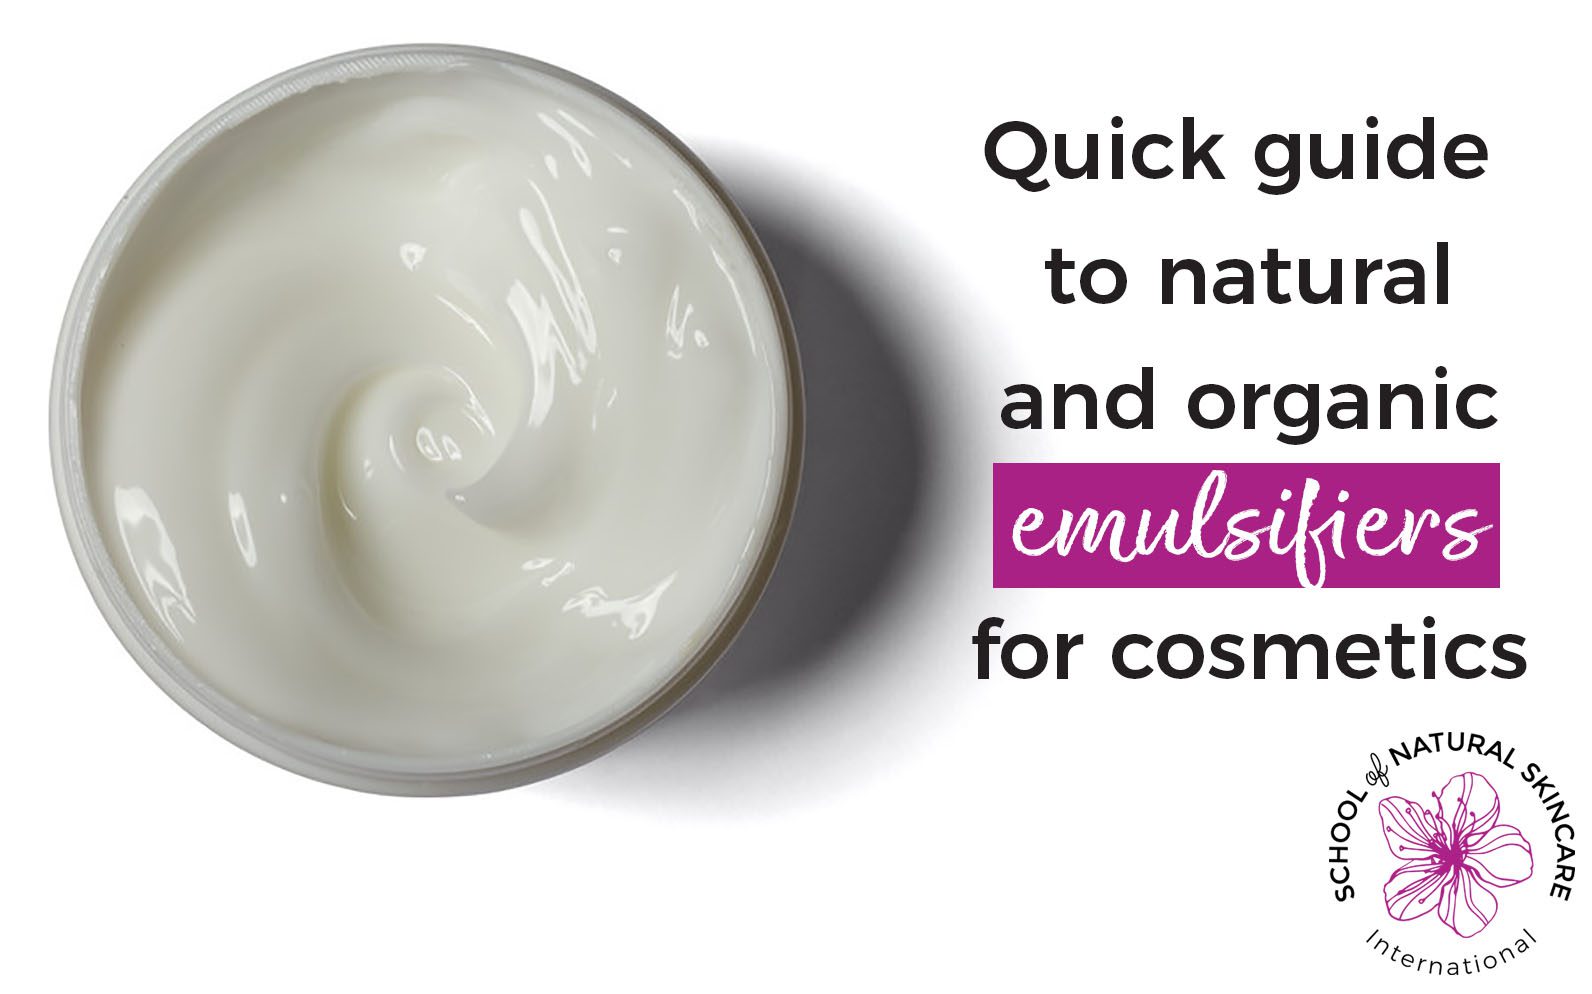 Application of Emulsifying Wax or Emulsifiers in Cosmetics